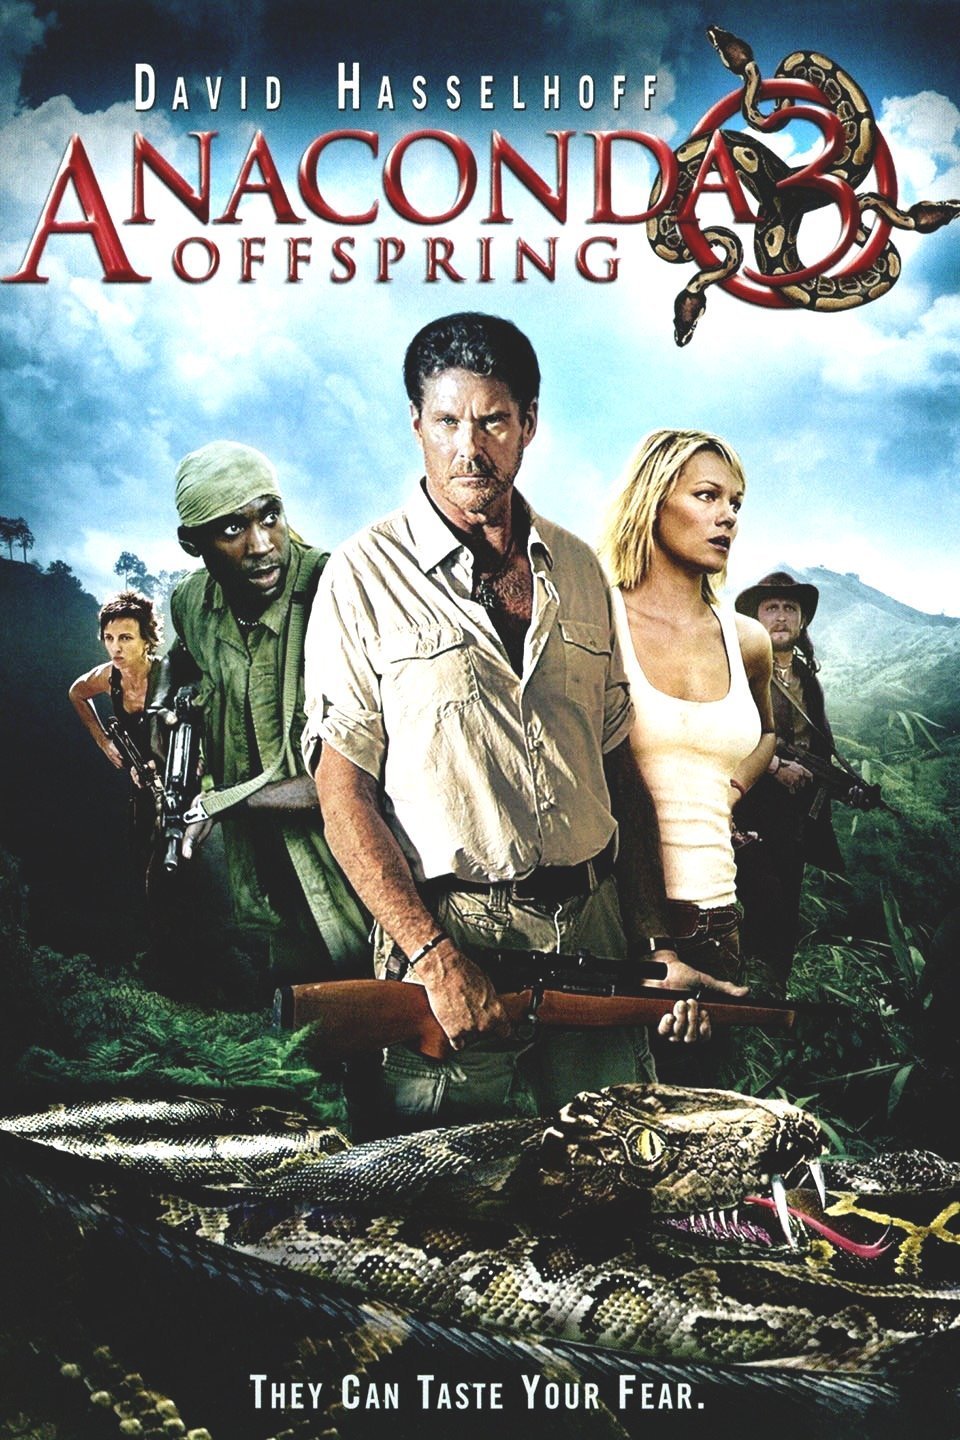 Poster of the movie Anaconda: Offspring